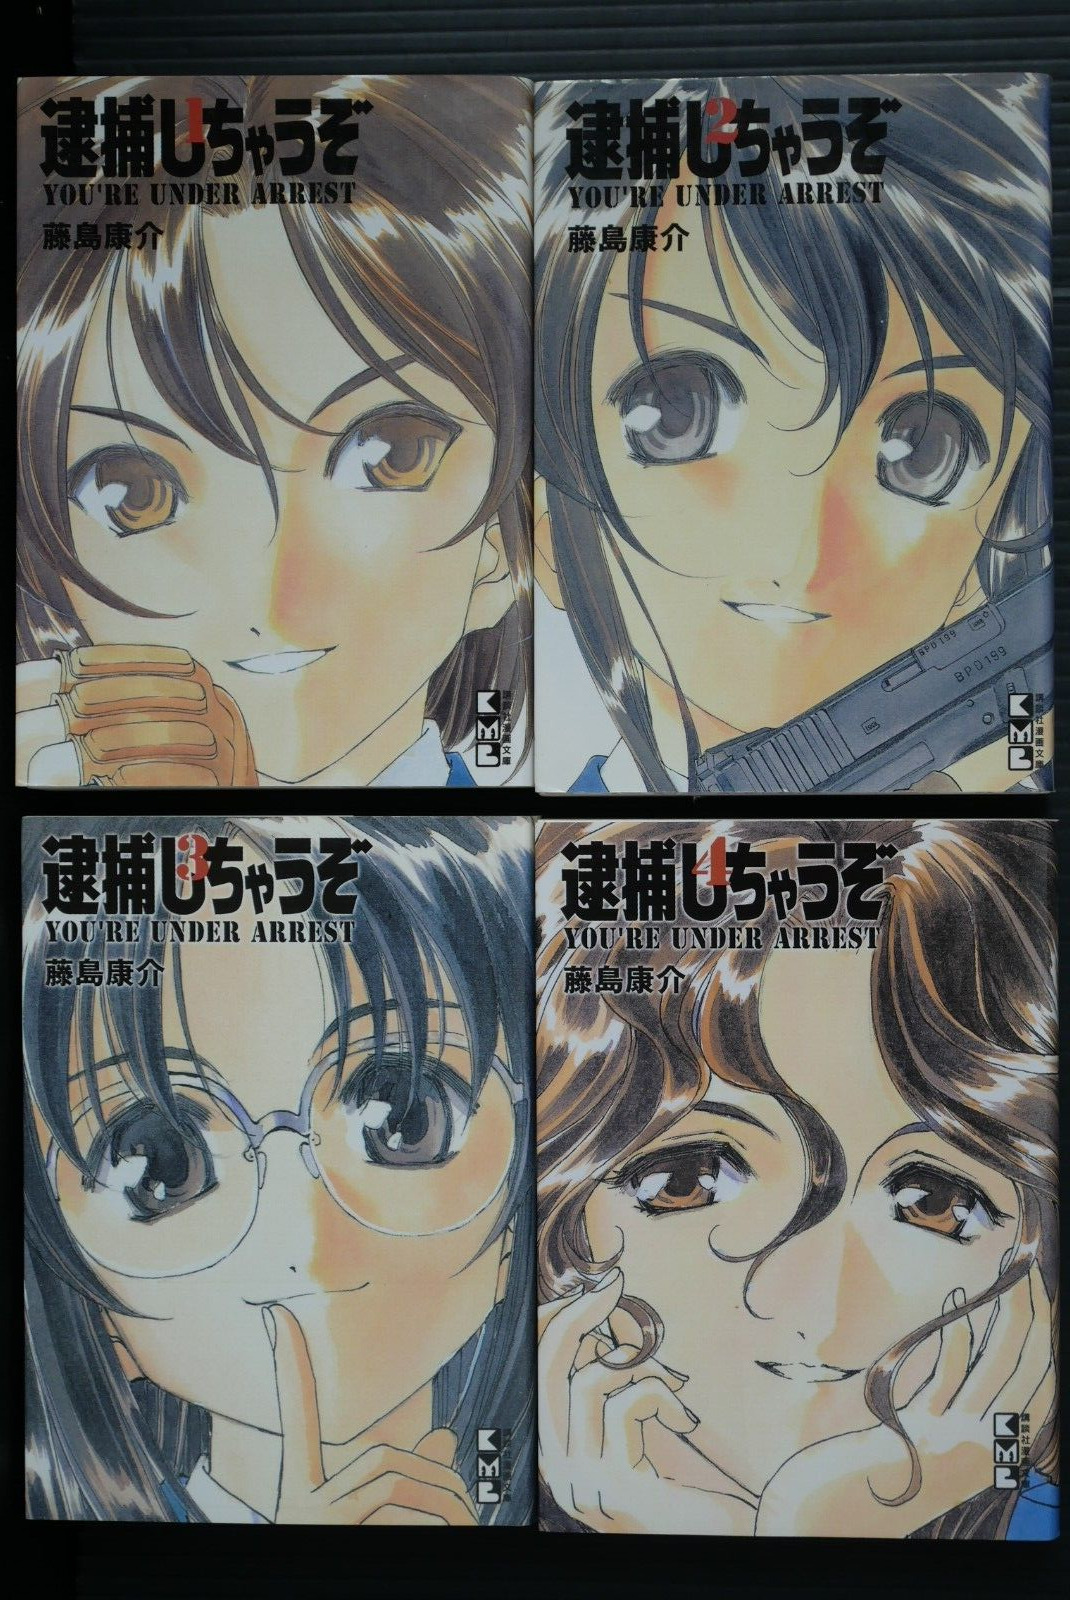 You're Under Arrest Manga Vol.1-4 Complete Set (Damage) by Kousuke Fujishima